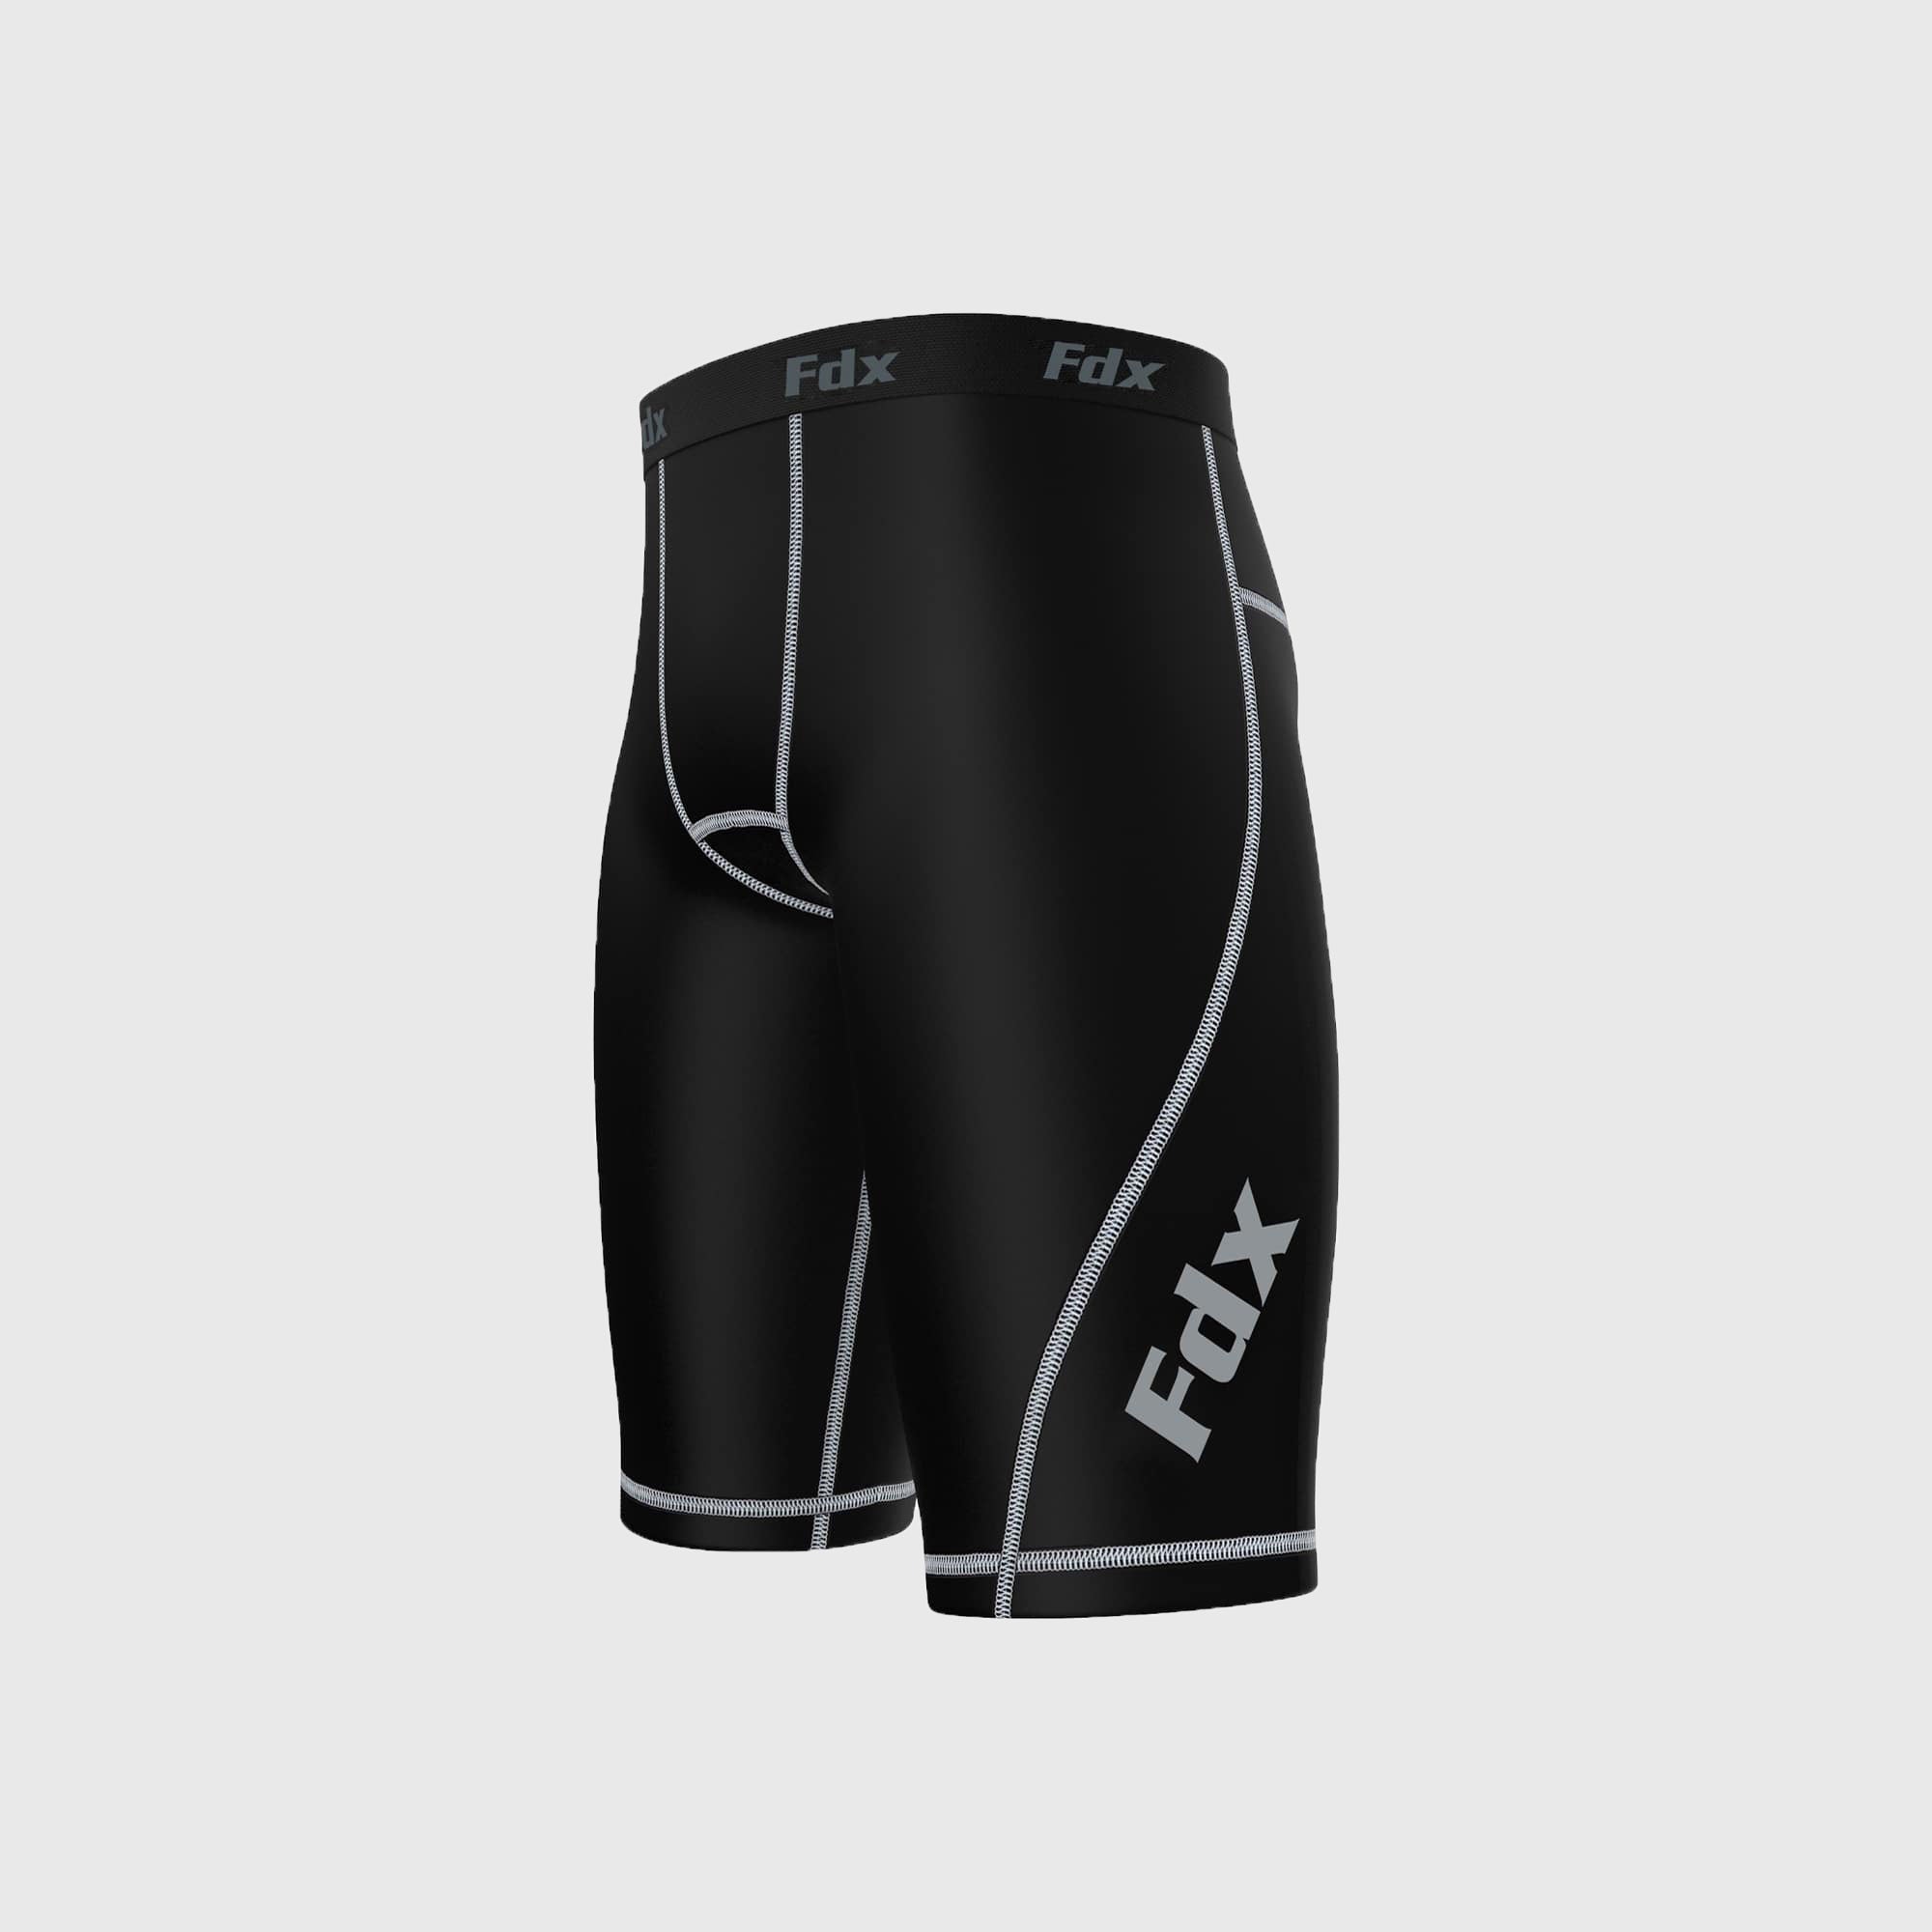 Fdx Men's Black Compression Shorts Skin Tight Gym Pants